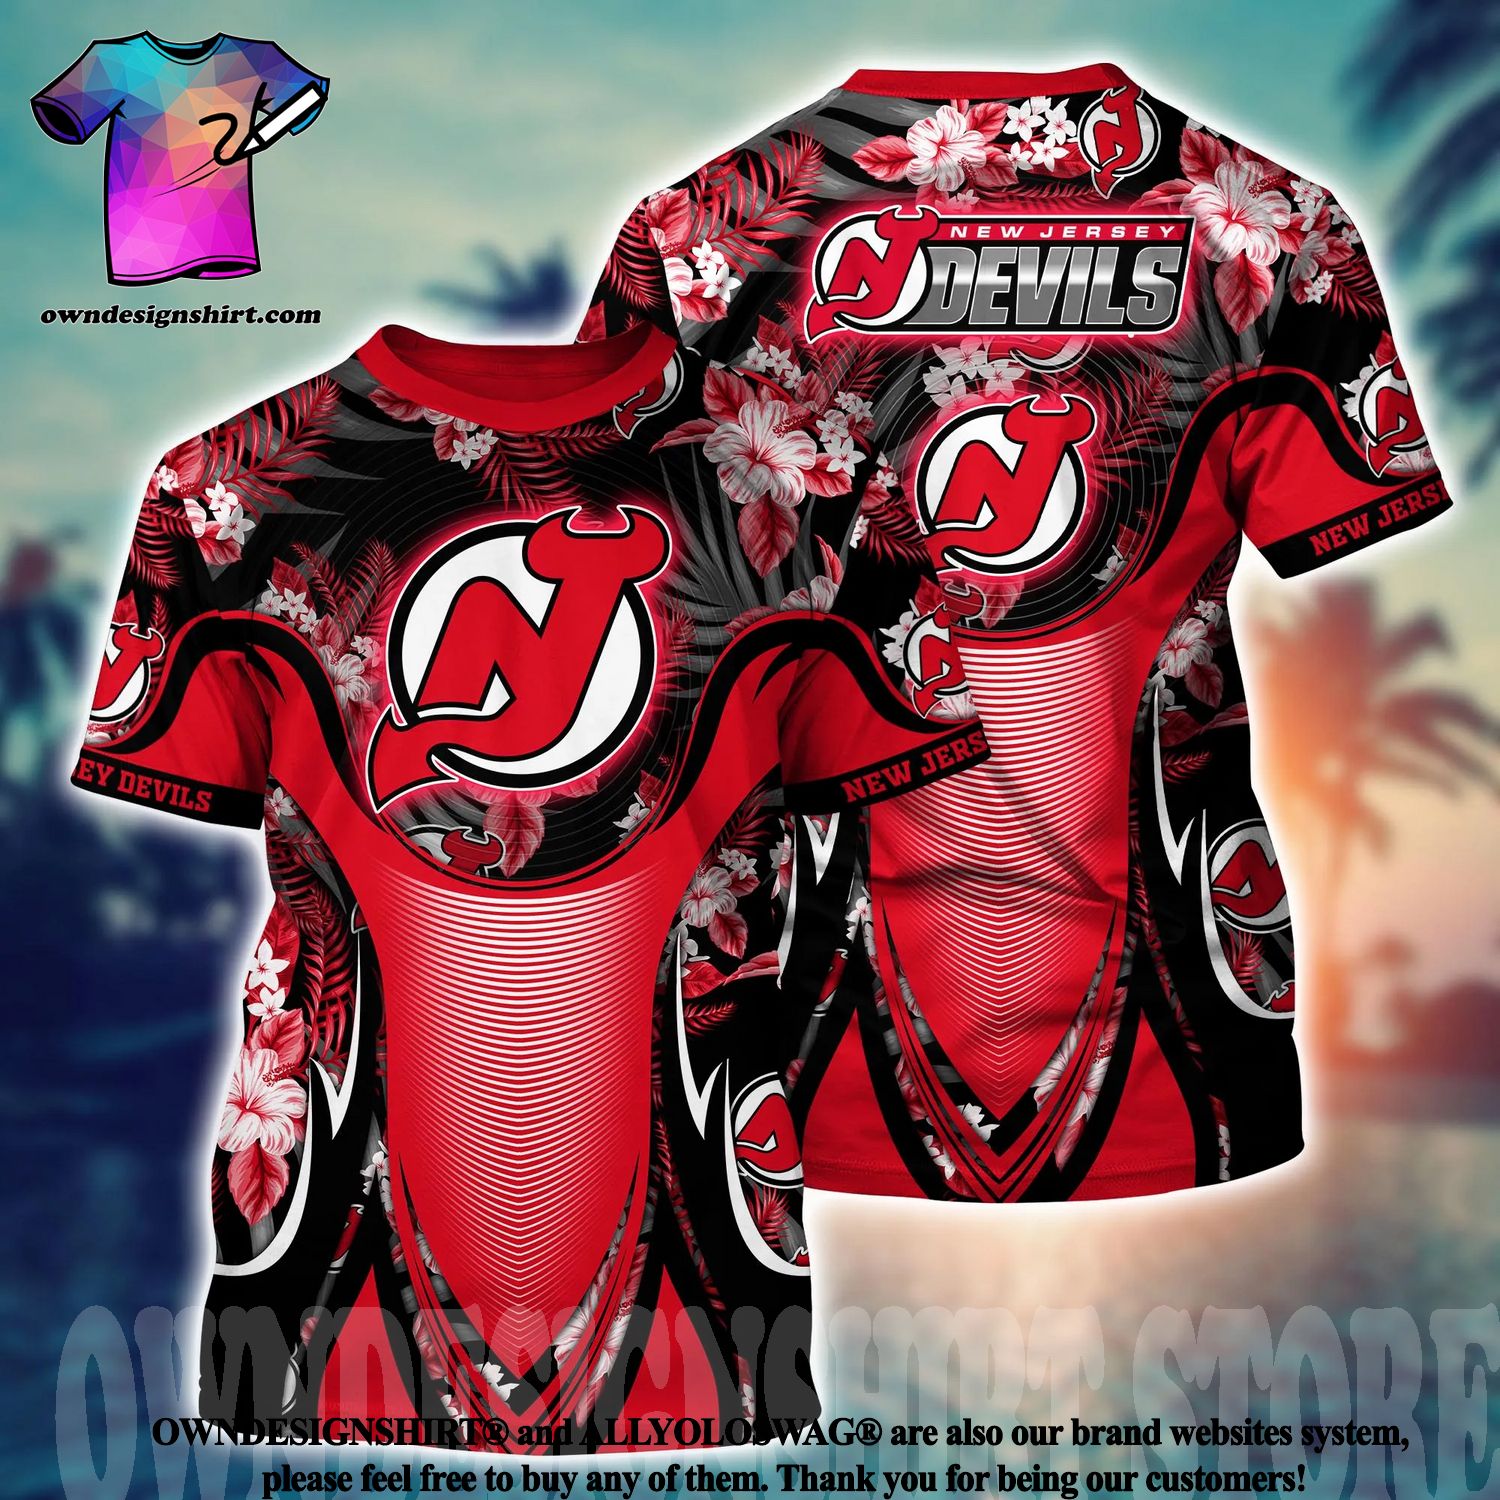 The Devils Lunar New Year jersey : r/hockeyjerseys